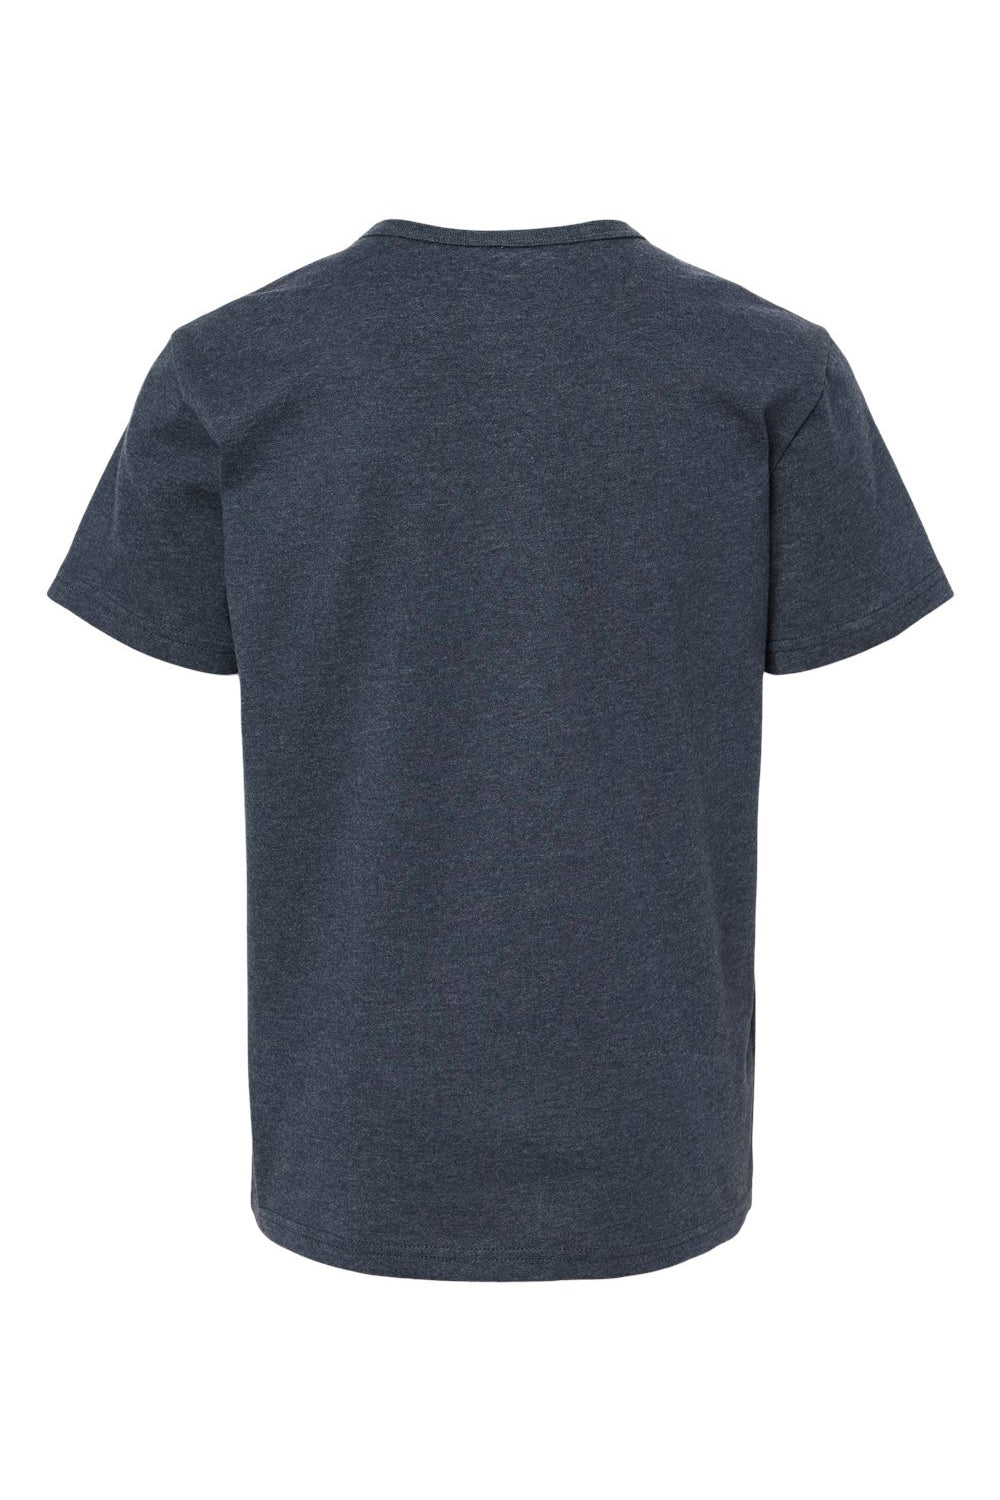 Kastlfel 2015 Youth RecycledSoft Short Sleeve Crewneck T-Shirt Midnight Blue Flat Back